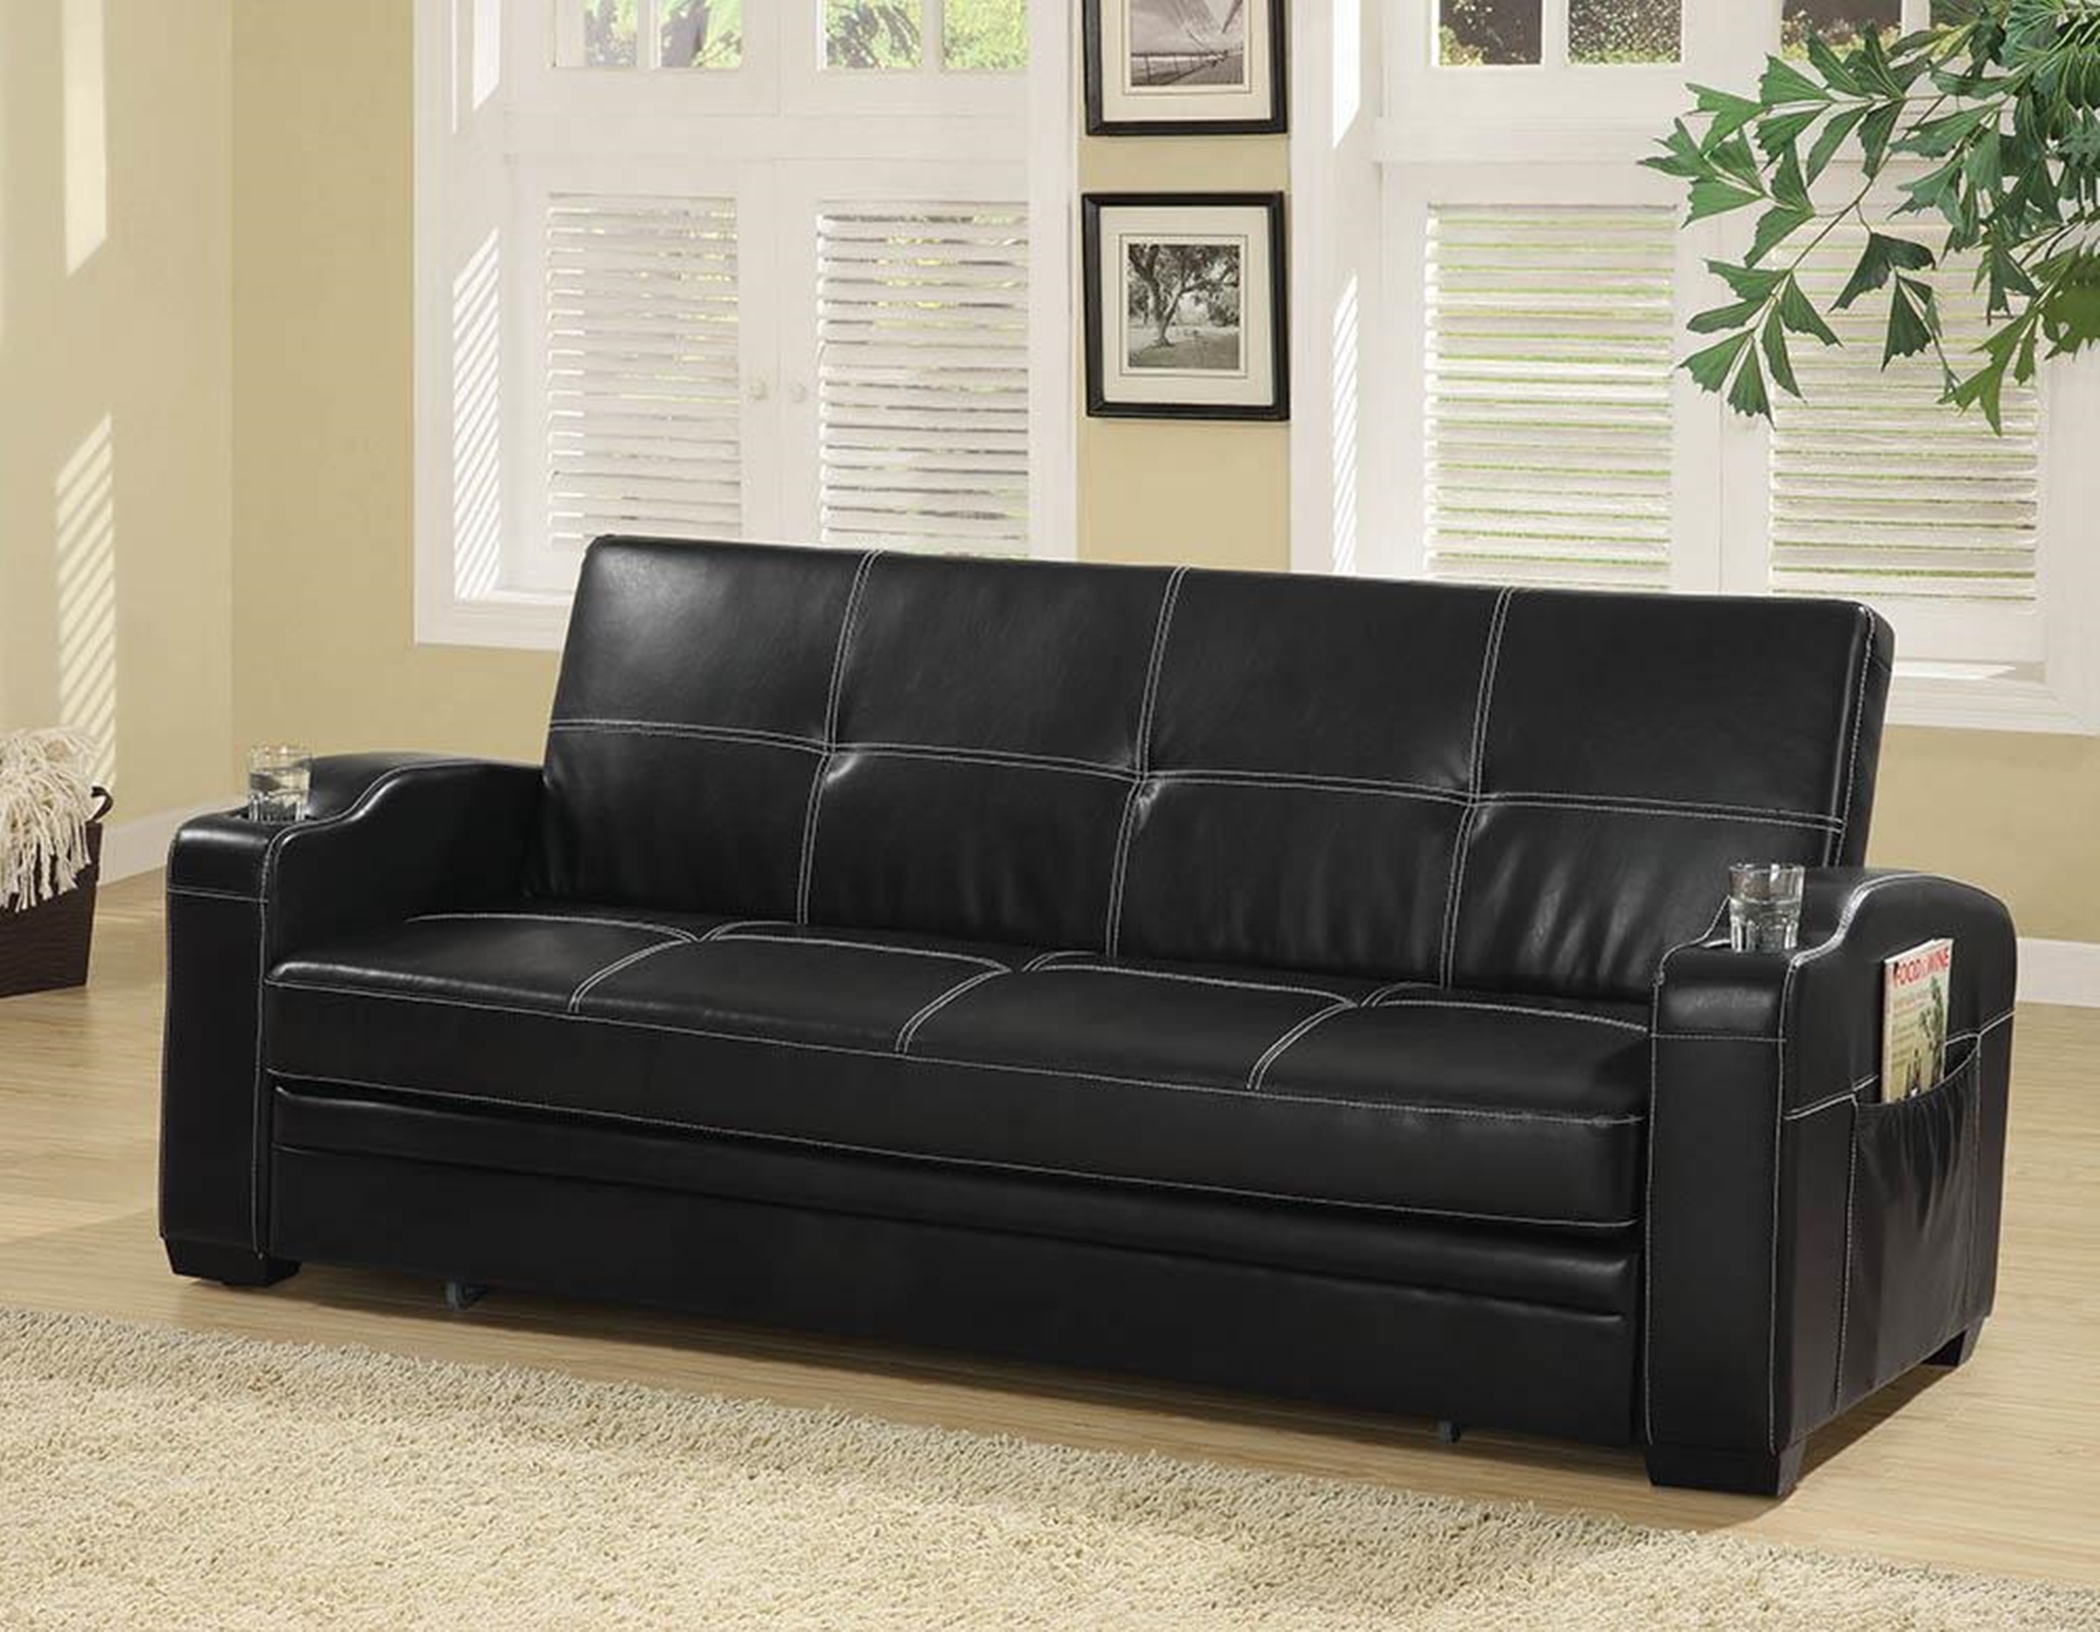 Contemporary Black Sofa Bed